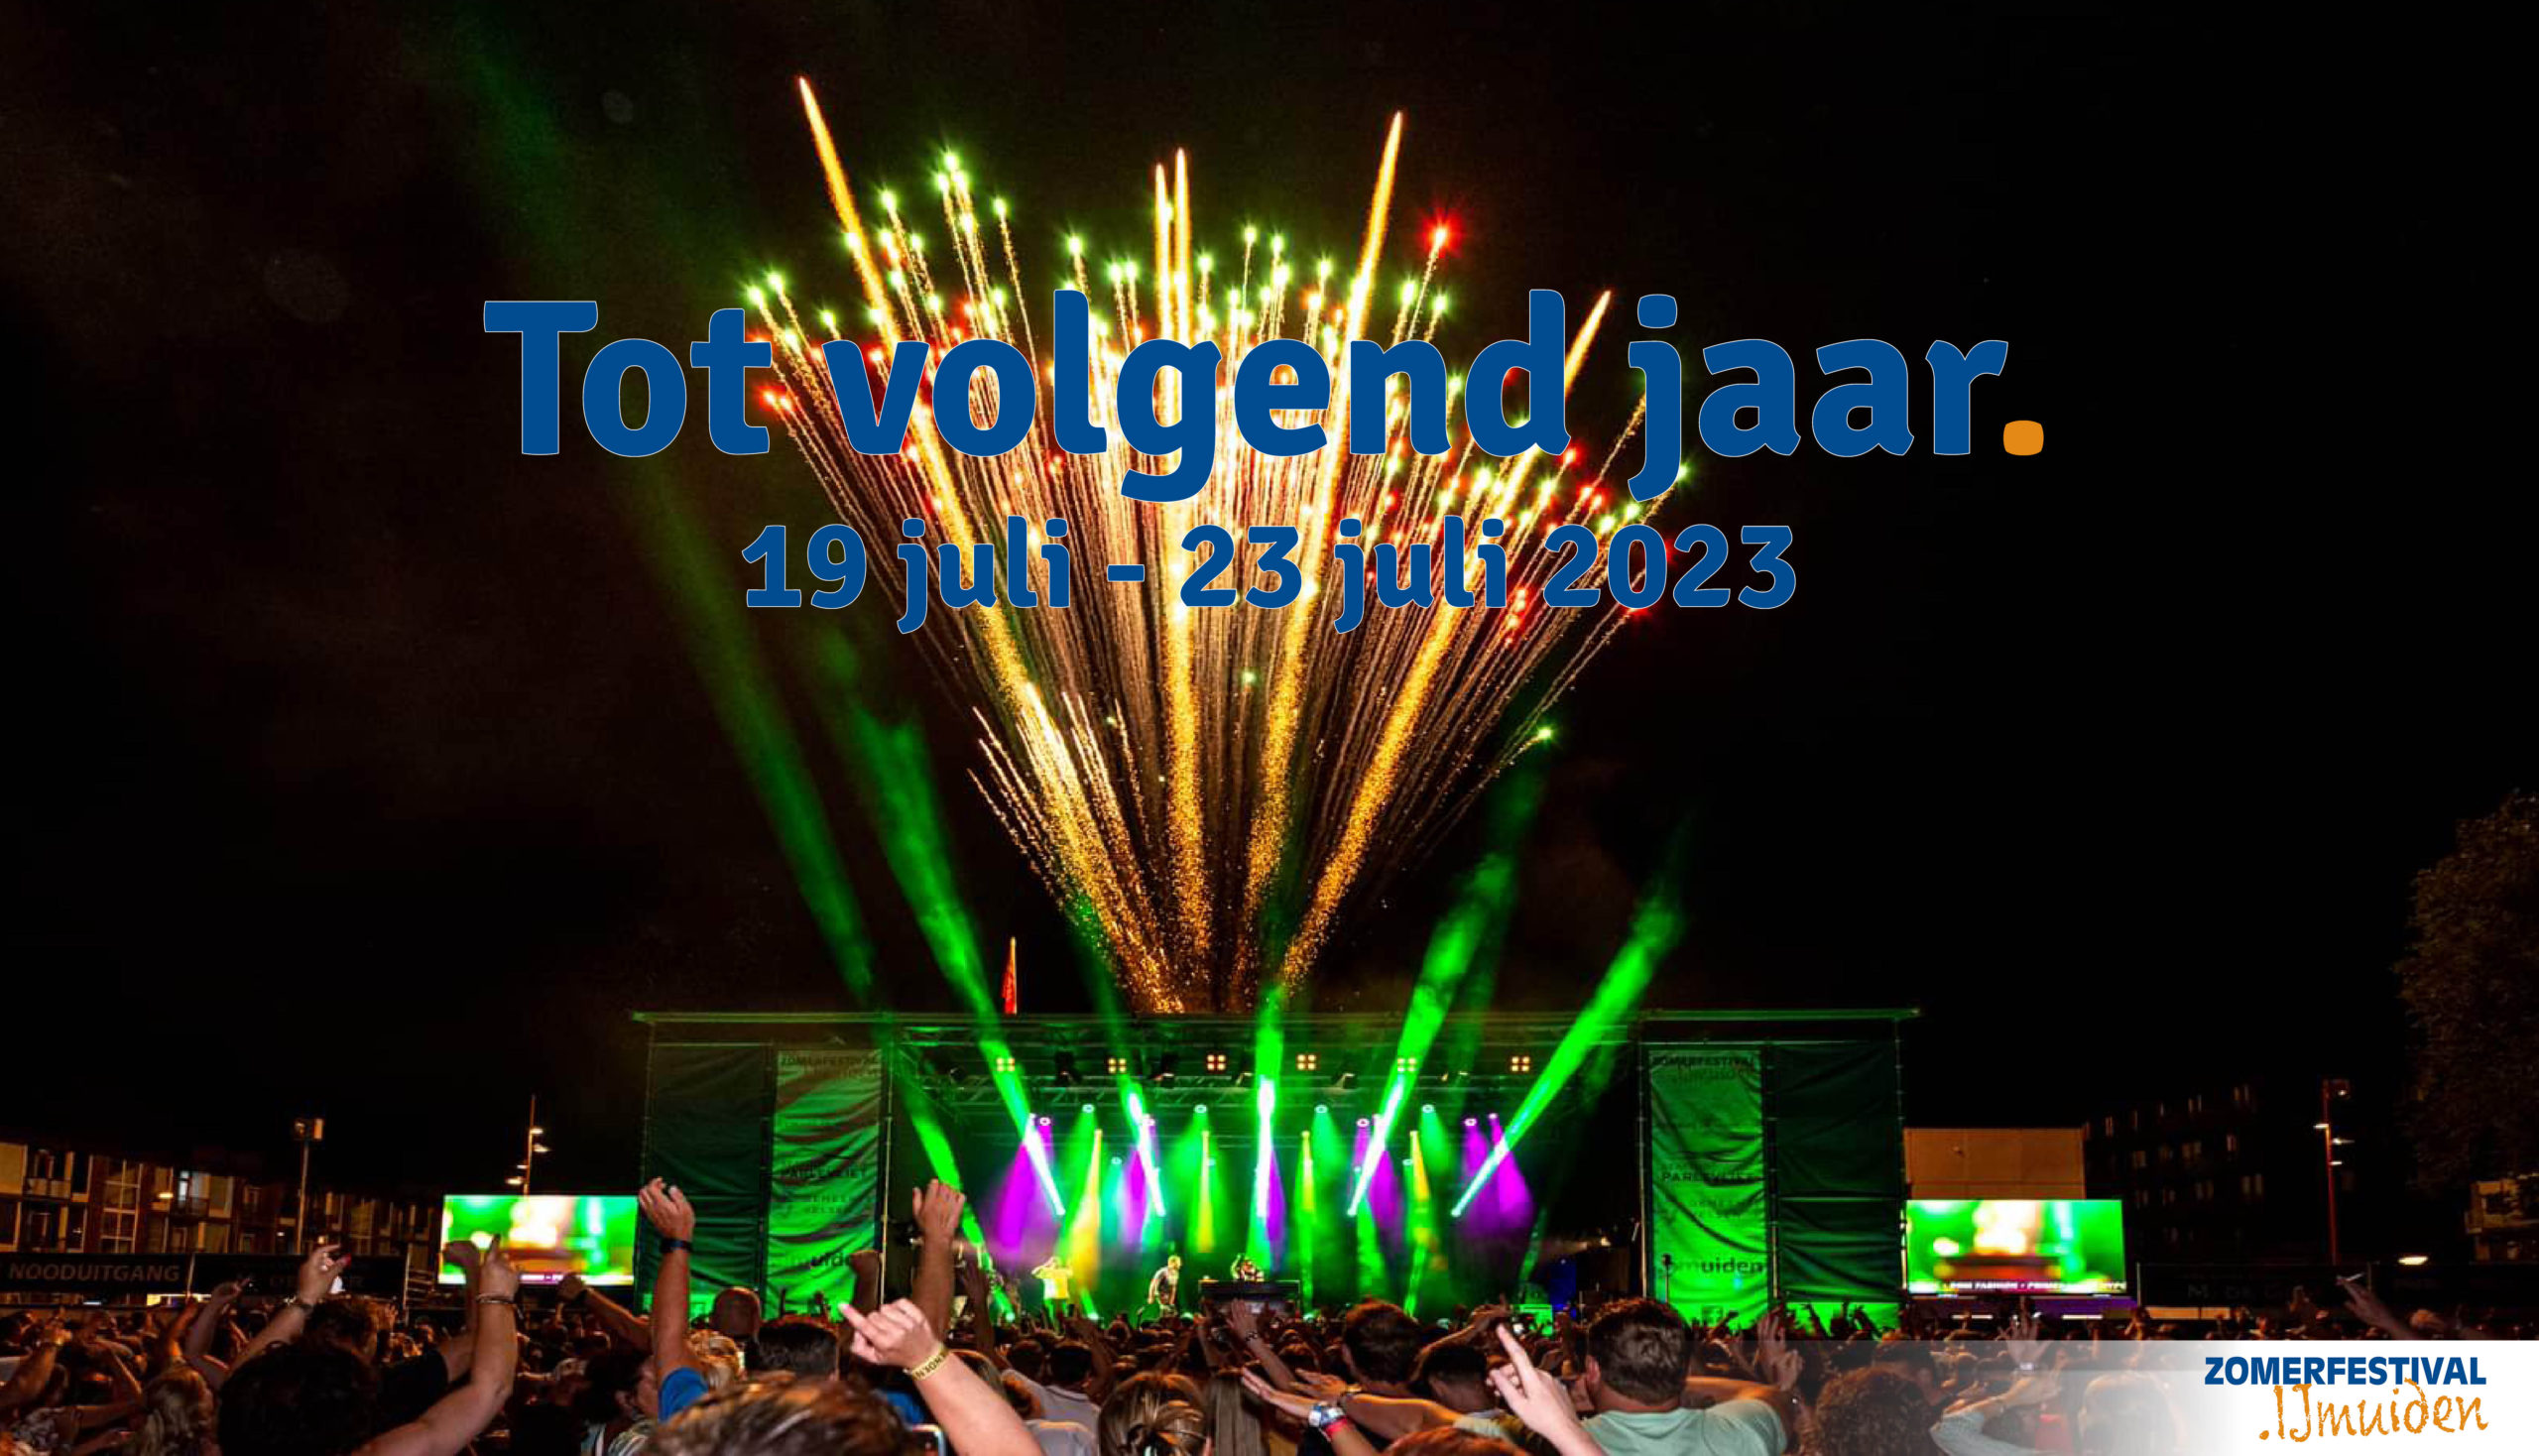 Zomerfestival IJmuiden | 19 juli 2023 tot en met 23 juli 2023